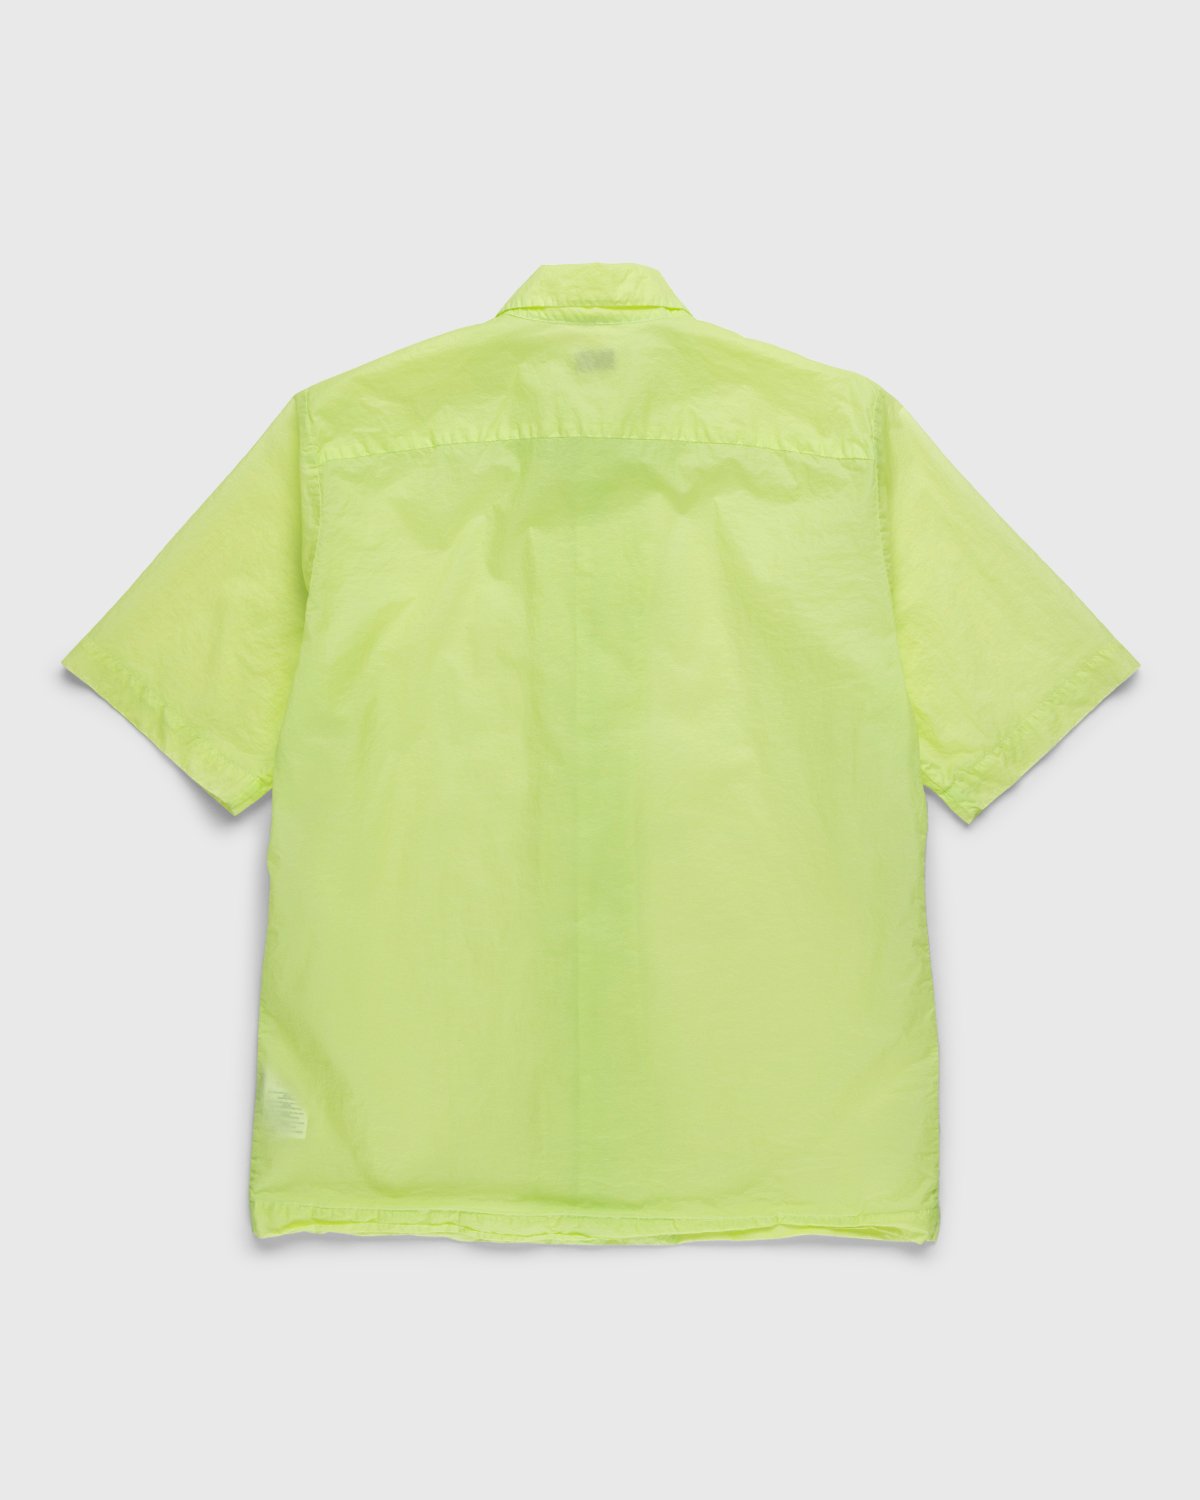 Dries van Noten - Clasen Shirt Lime - Clothing - Green - Image 2